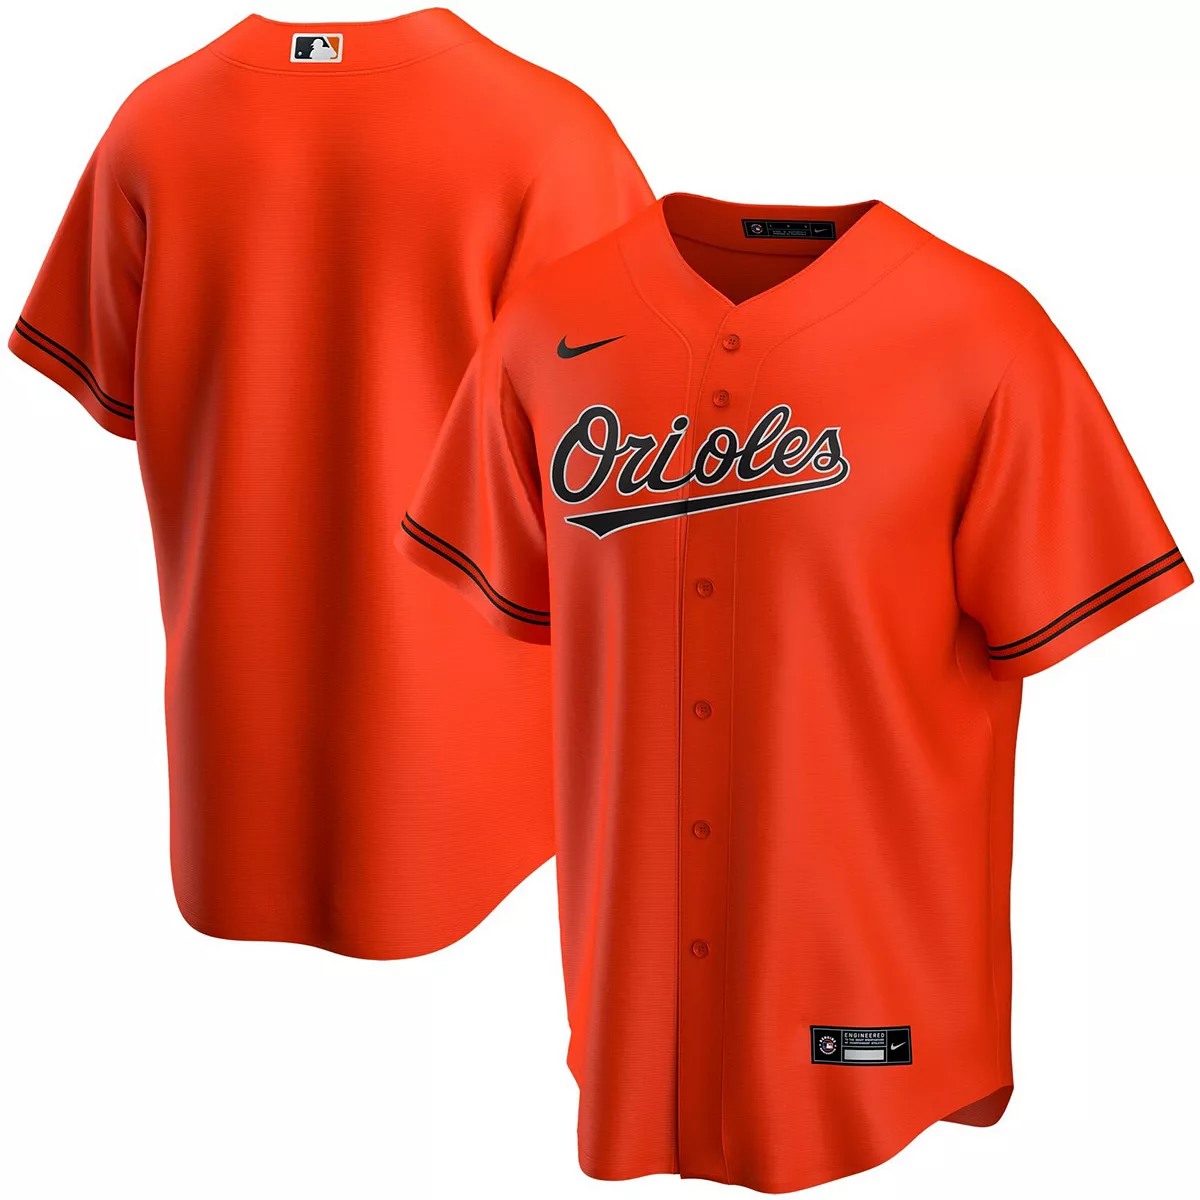 Replica Orioles jersey